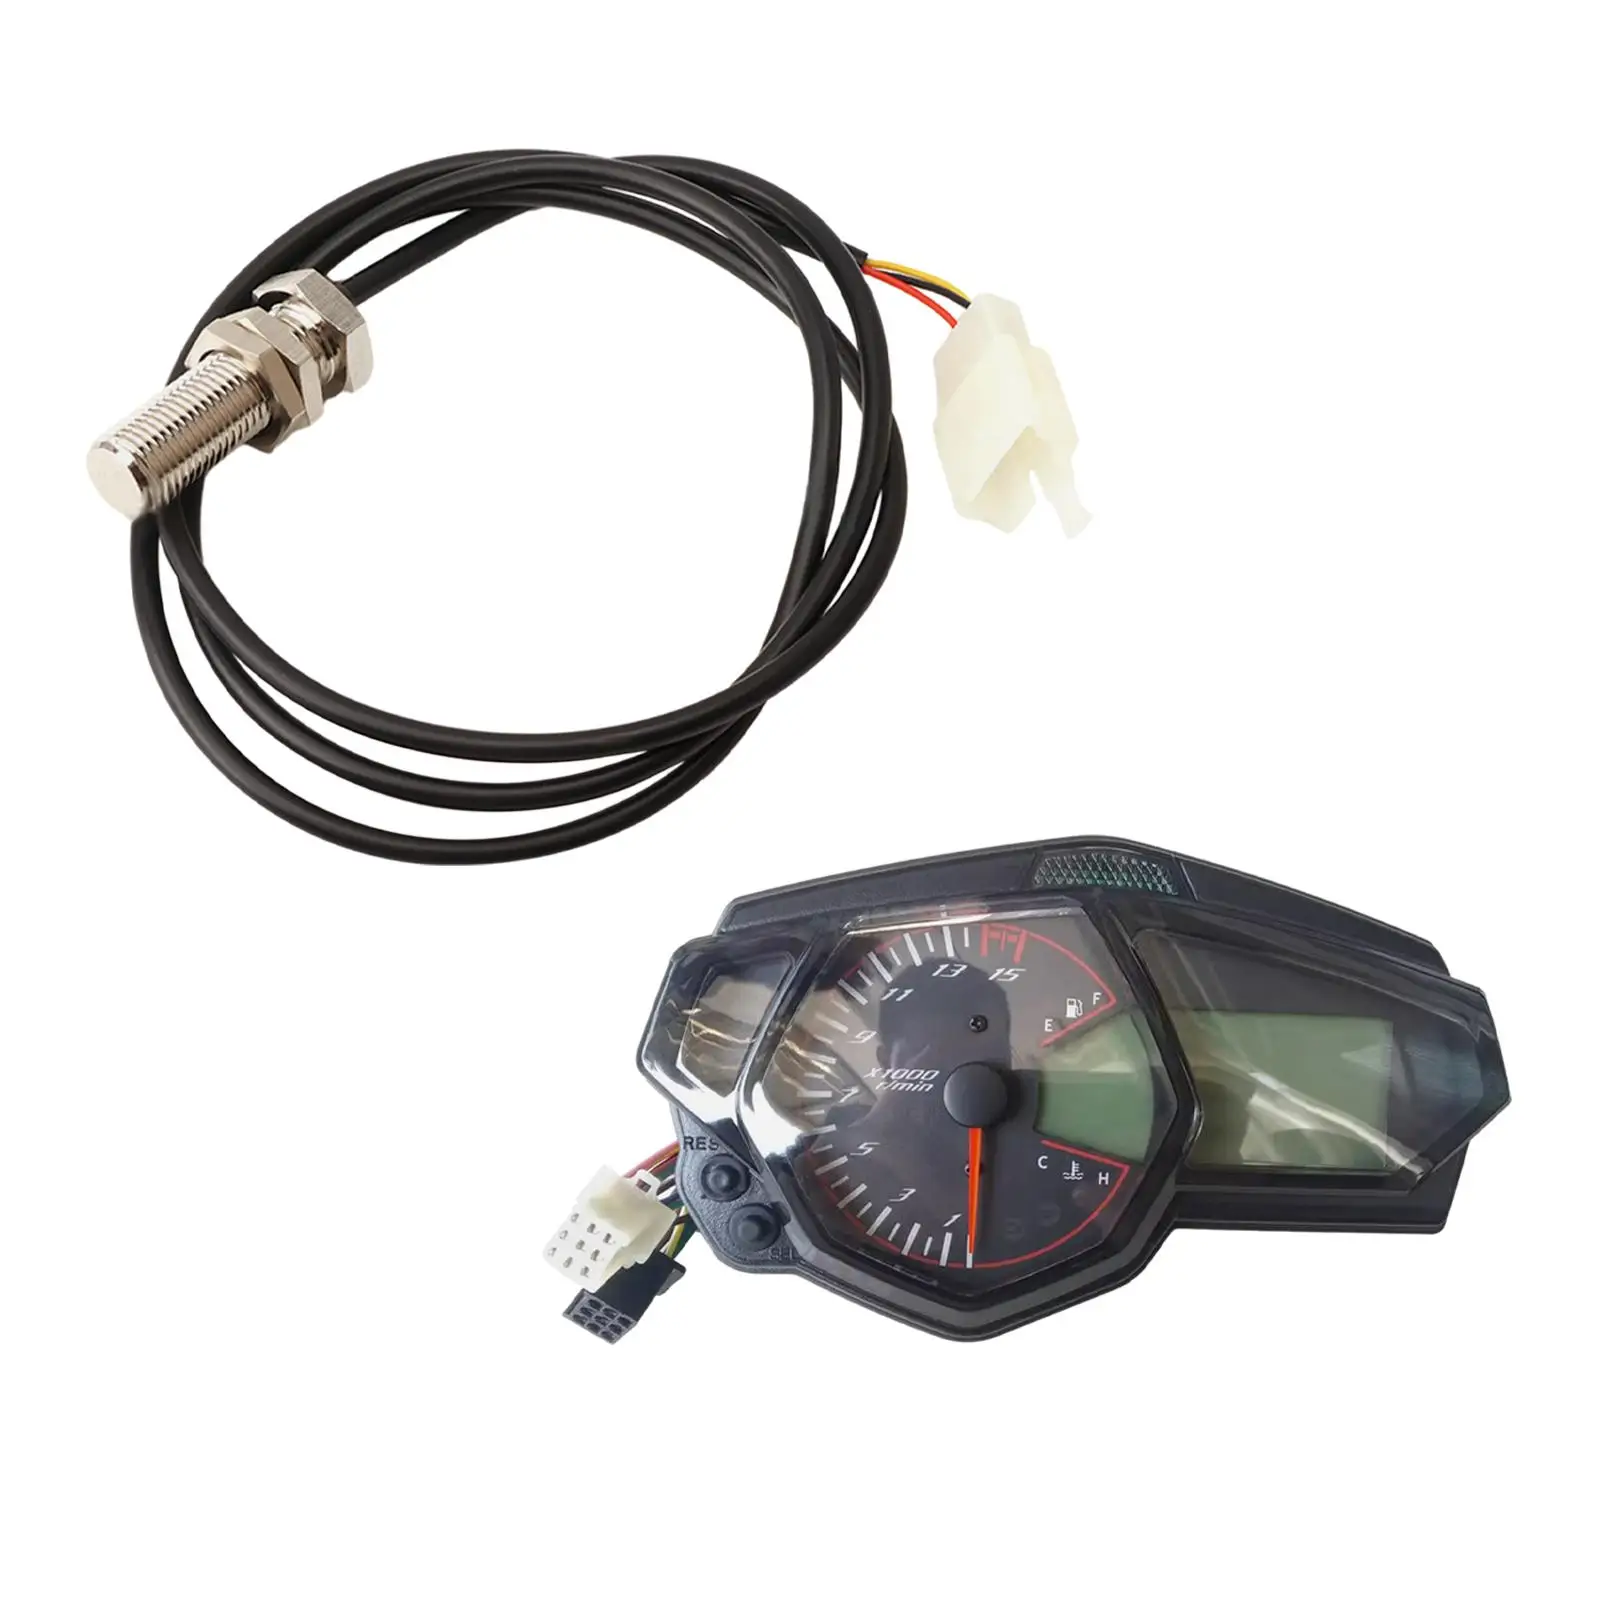 Motorcycle Speedometer Fuel Level Display LCD Digital Gauge Instrument for